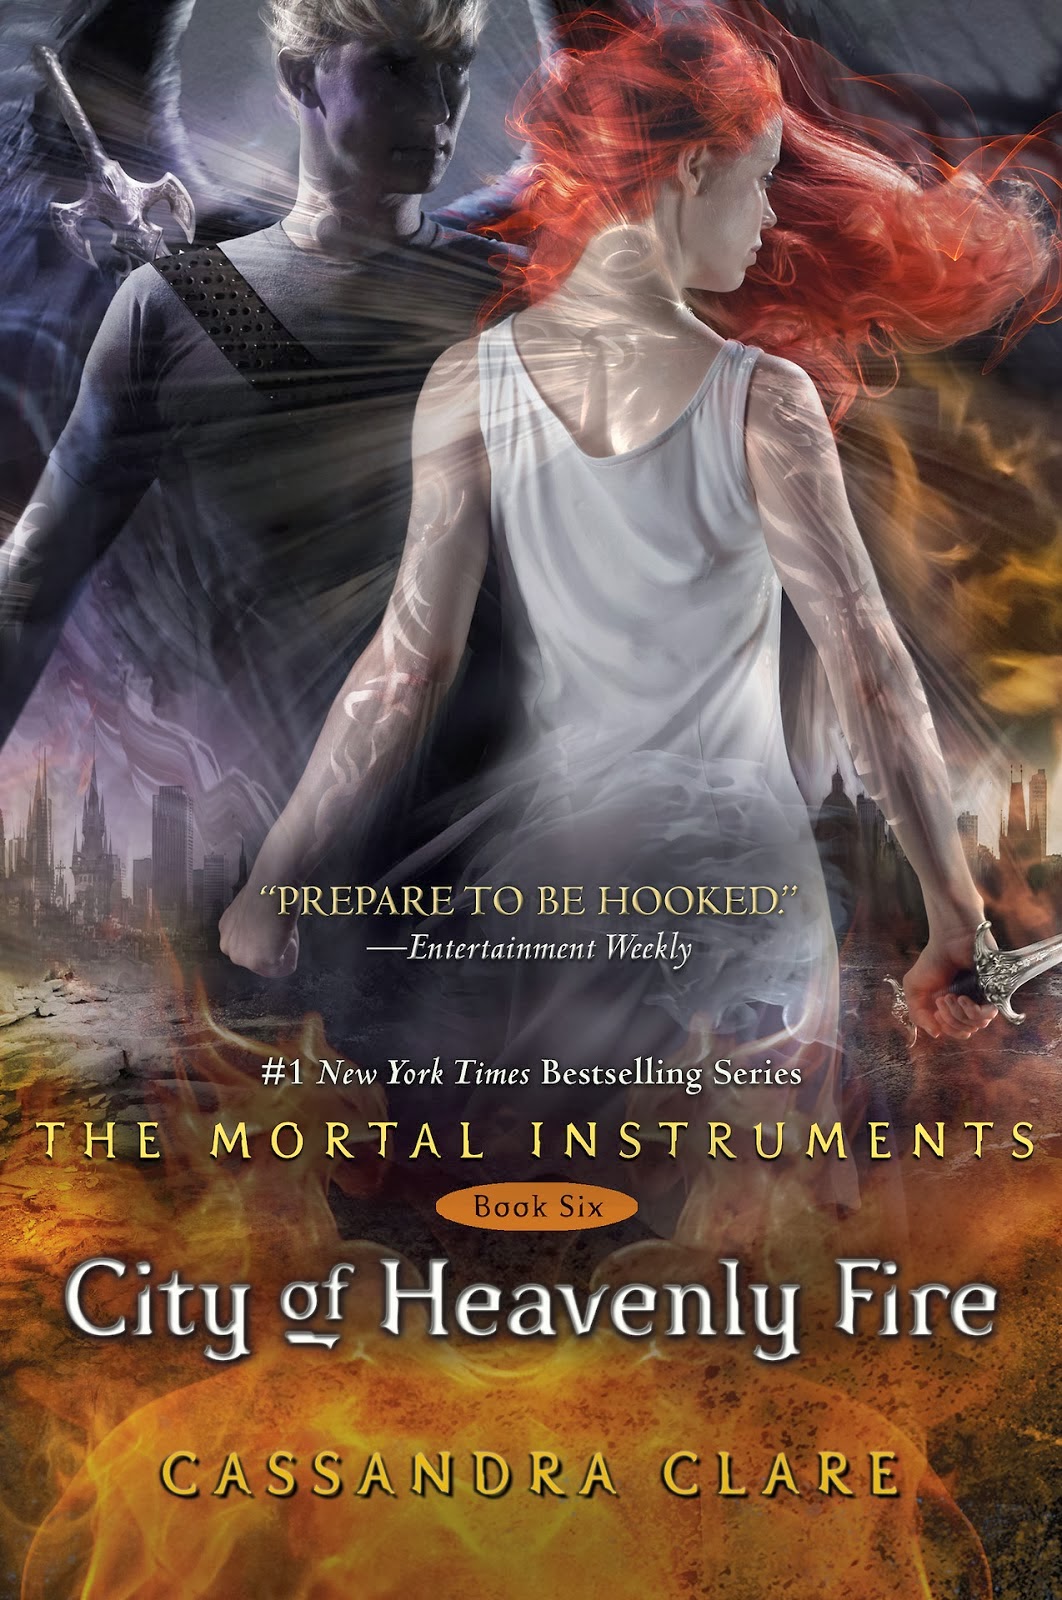 http://books.simonandschuster.com/City-of-Heavenly-Fire/Cassandra-Clare/The-Mortal-Instruments/9781442416895